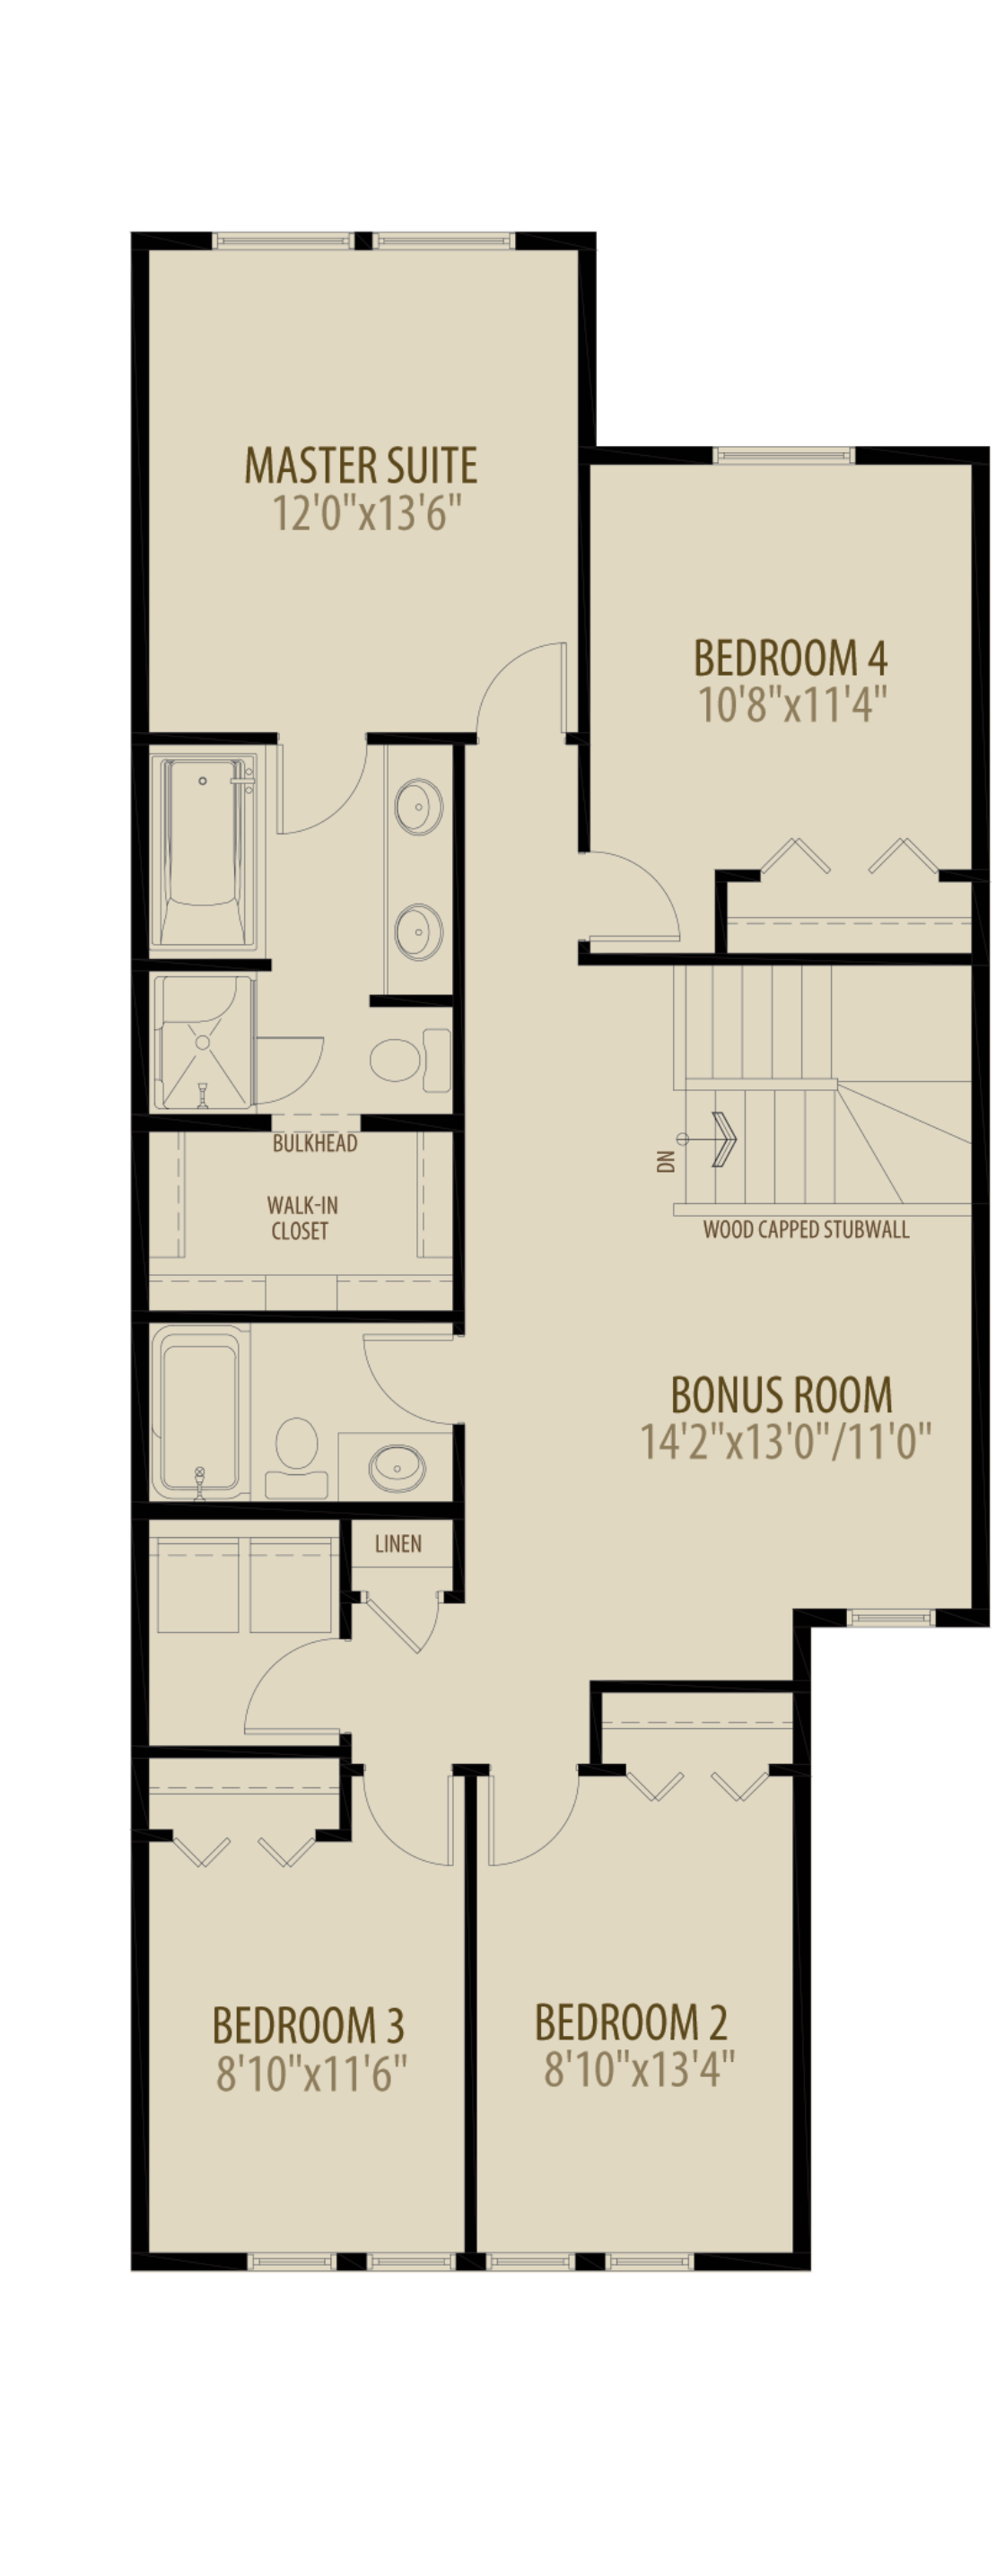 4th Bedroom Bonus Room Adds 105 sq ft